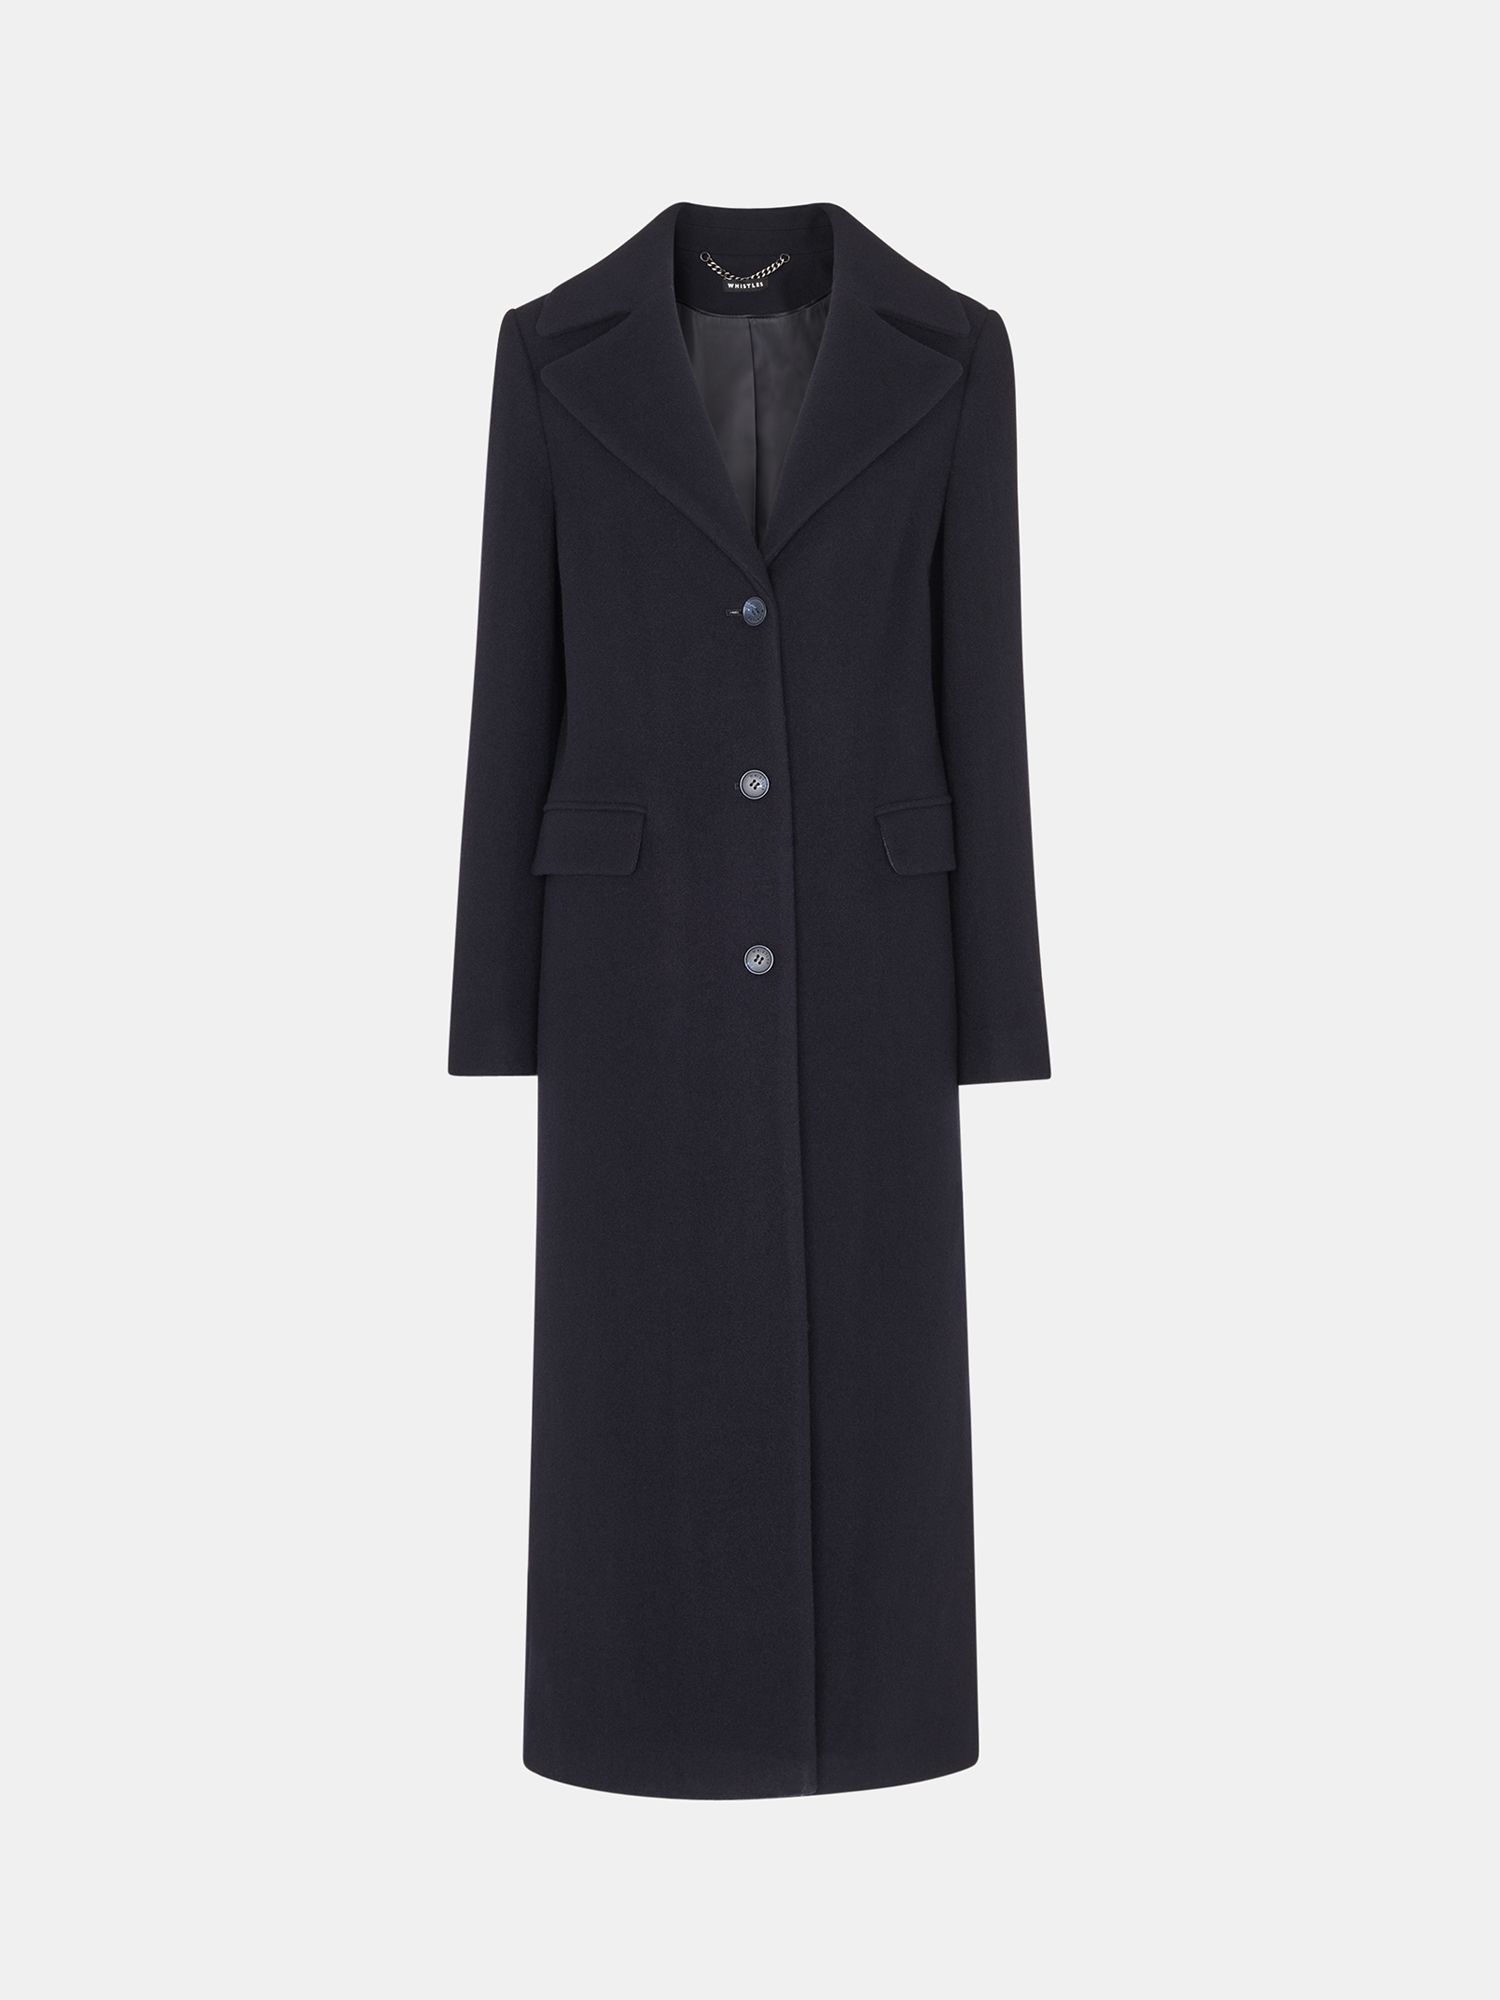 Hobbs Nell Wool Blend Maxi Coat, Black, 6